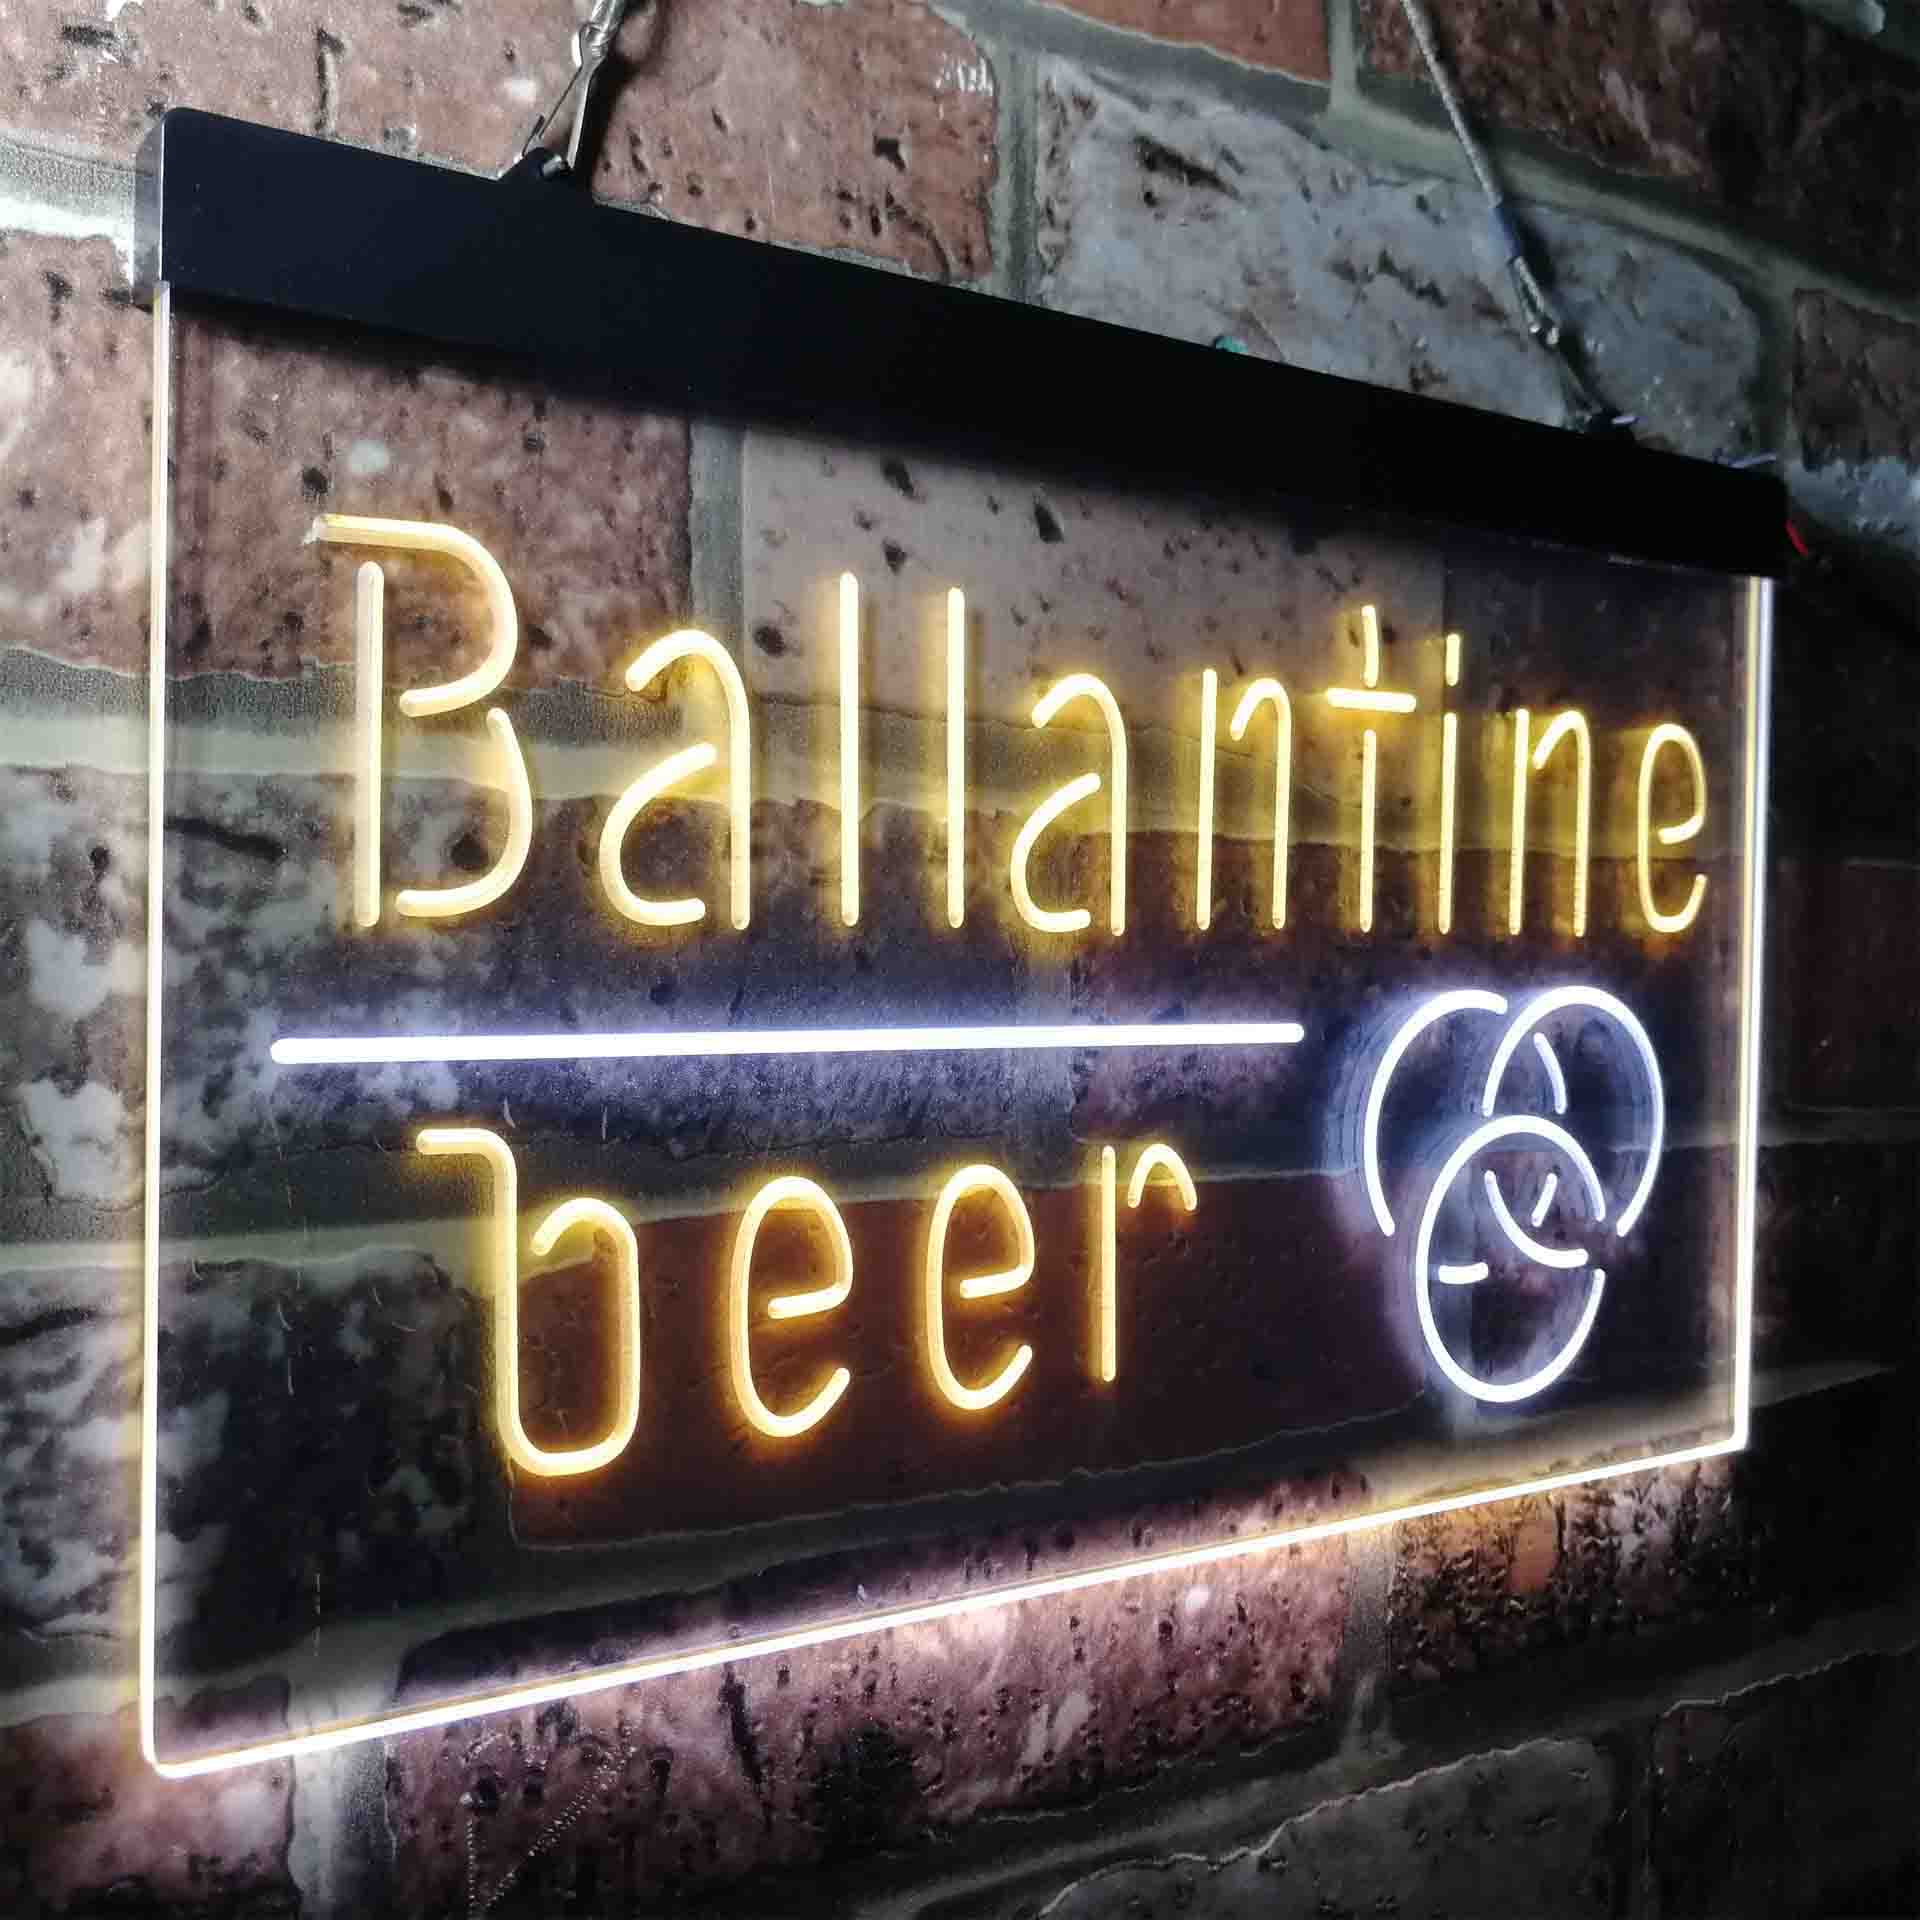 Ballantine Beer Bar Neon-Like LED Sign